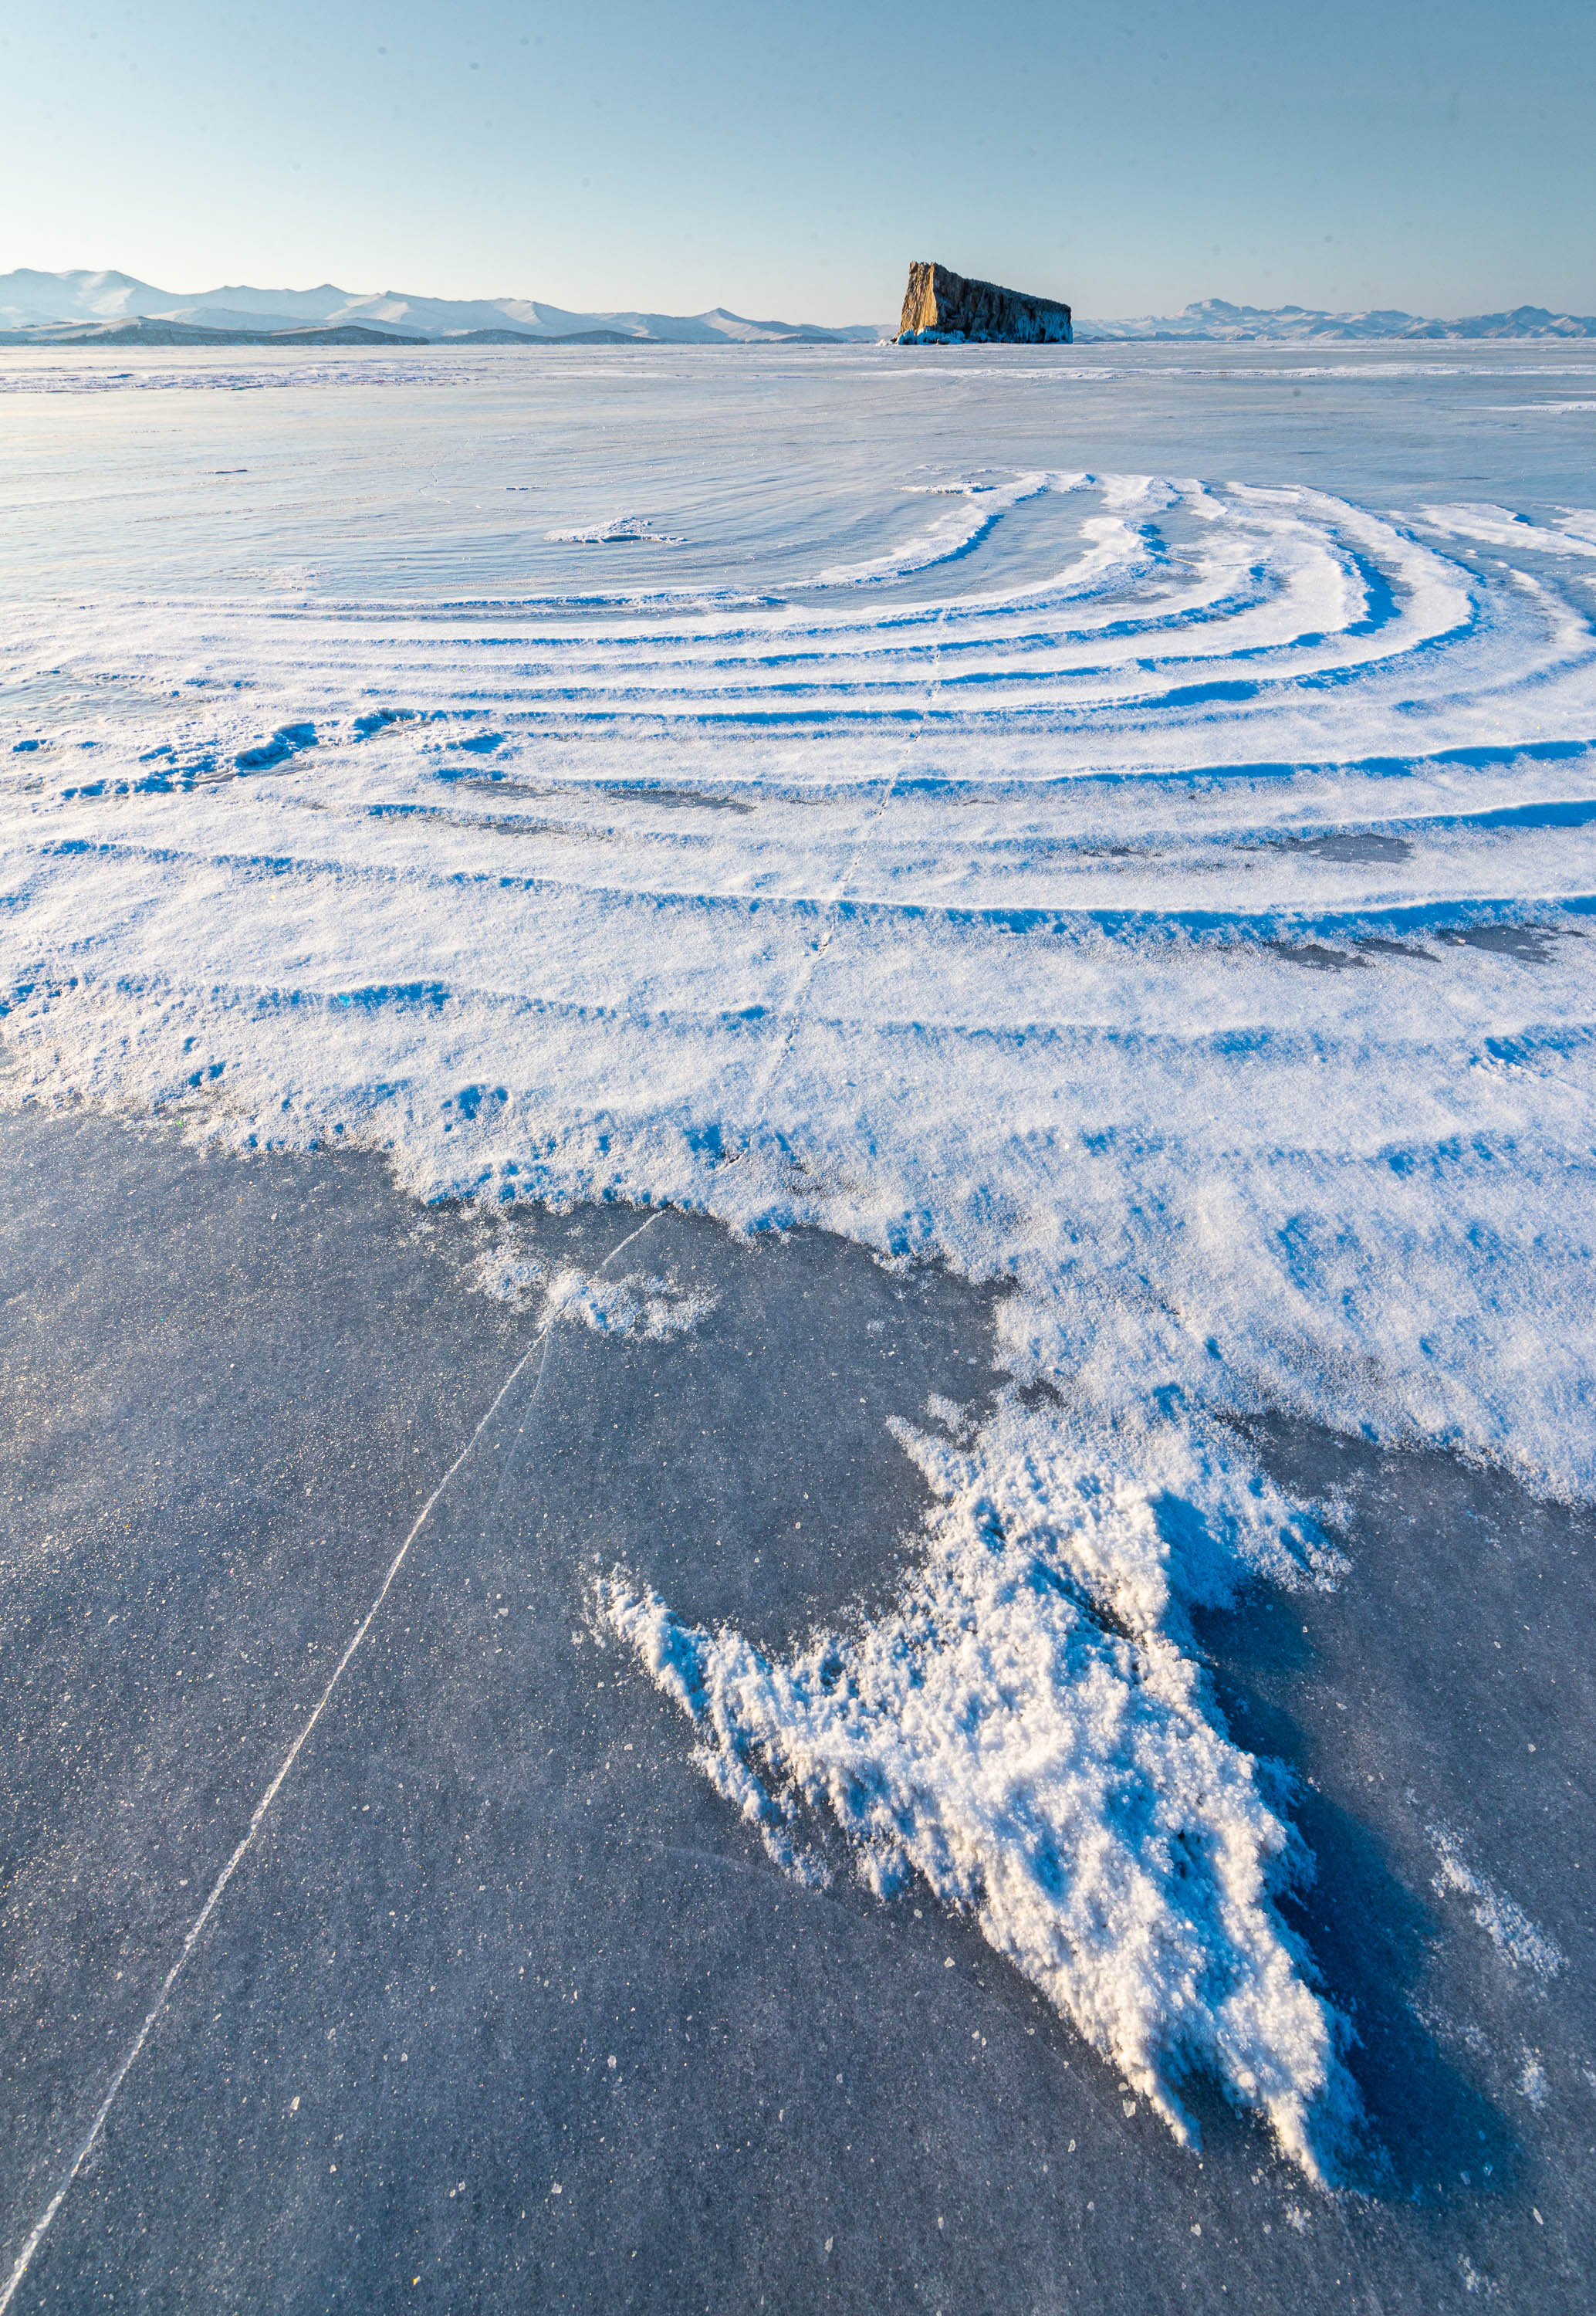 A snow-covered area with some snow spread like a powder, Lake Baikal #25, Siberia, Russia